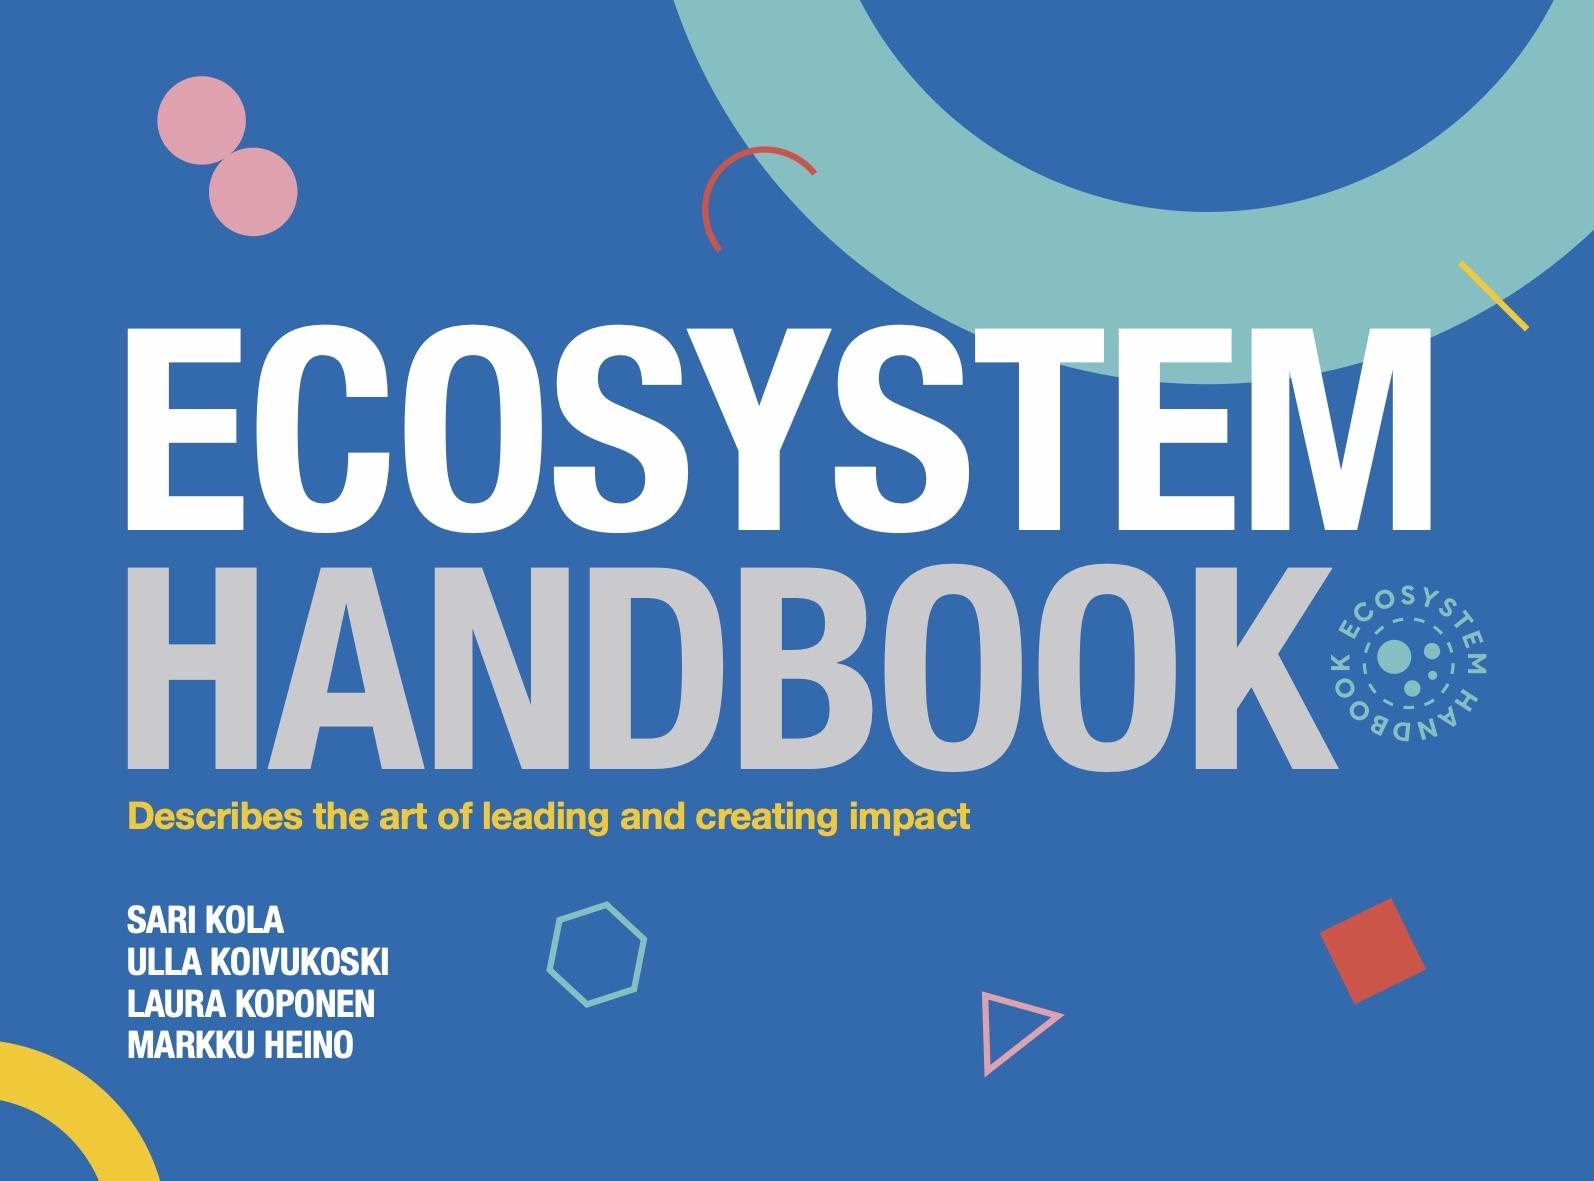 Ecosystem Handbook: Why read it?